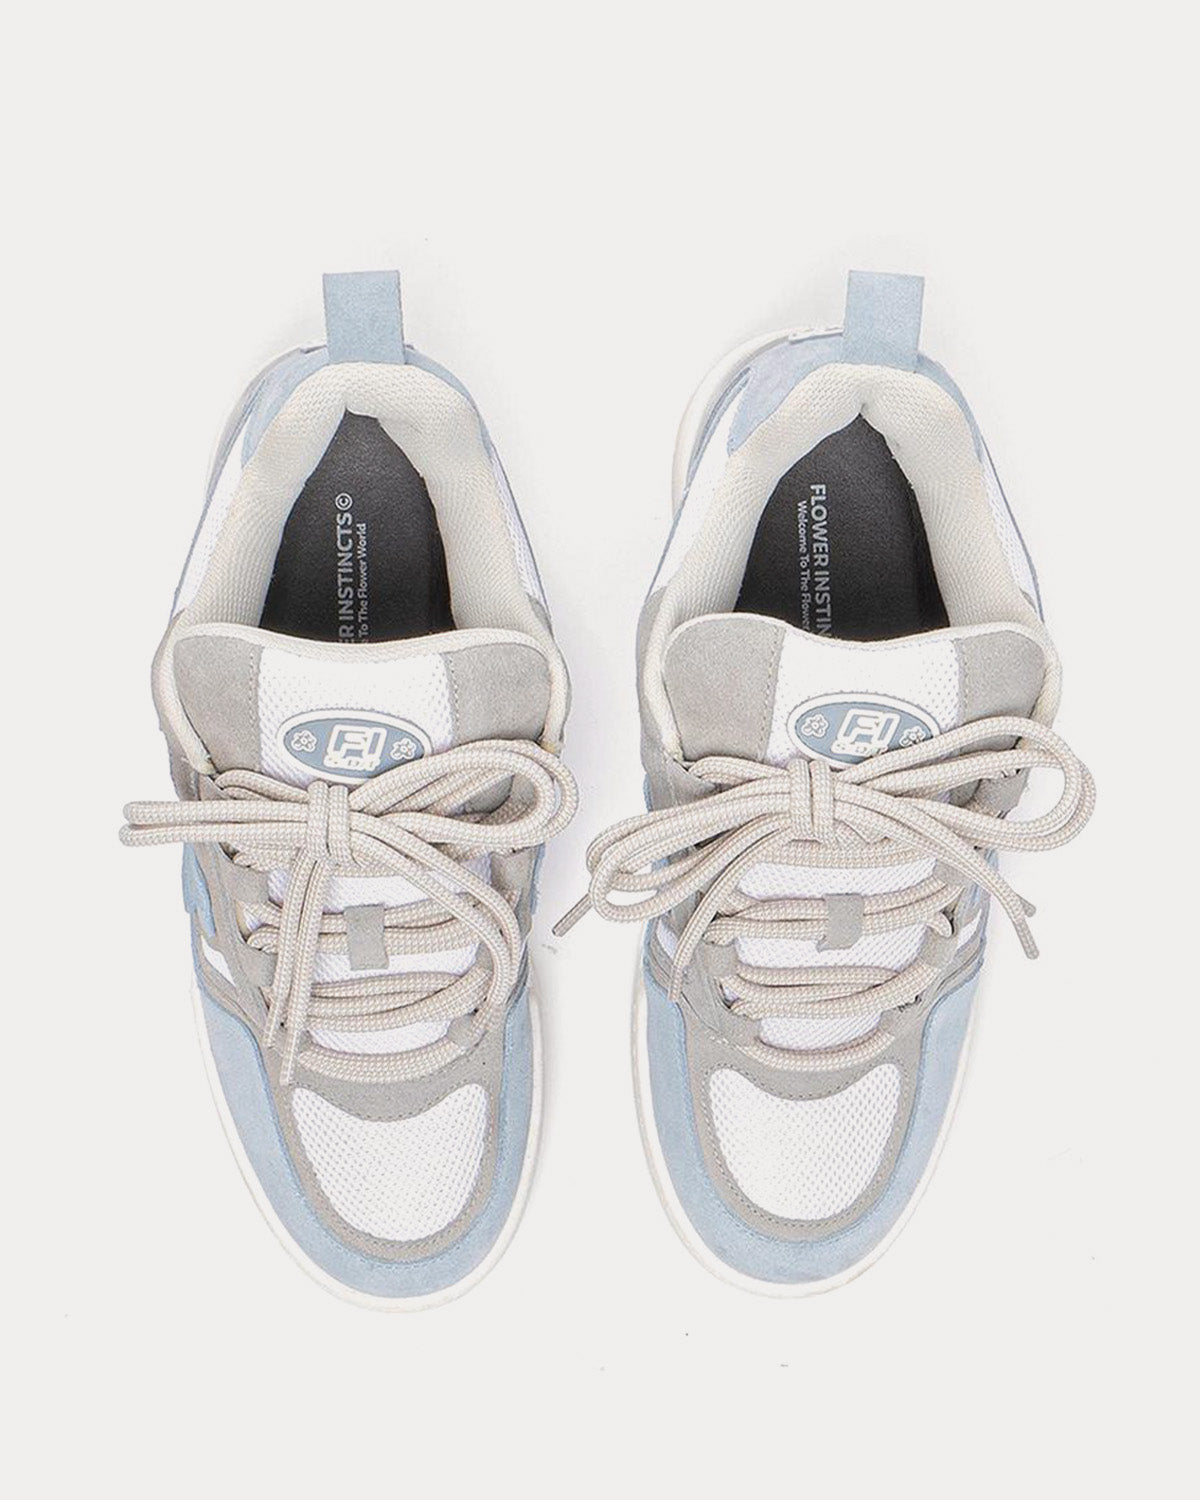 Flower Instincts - 101 Grey / Blue Low Top Sneakers